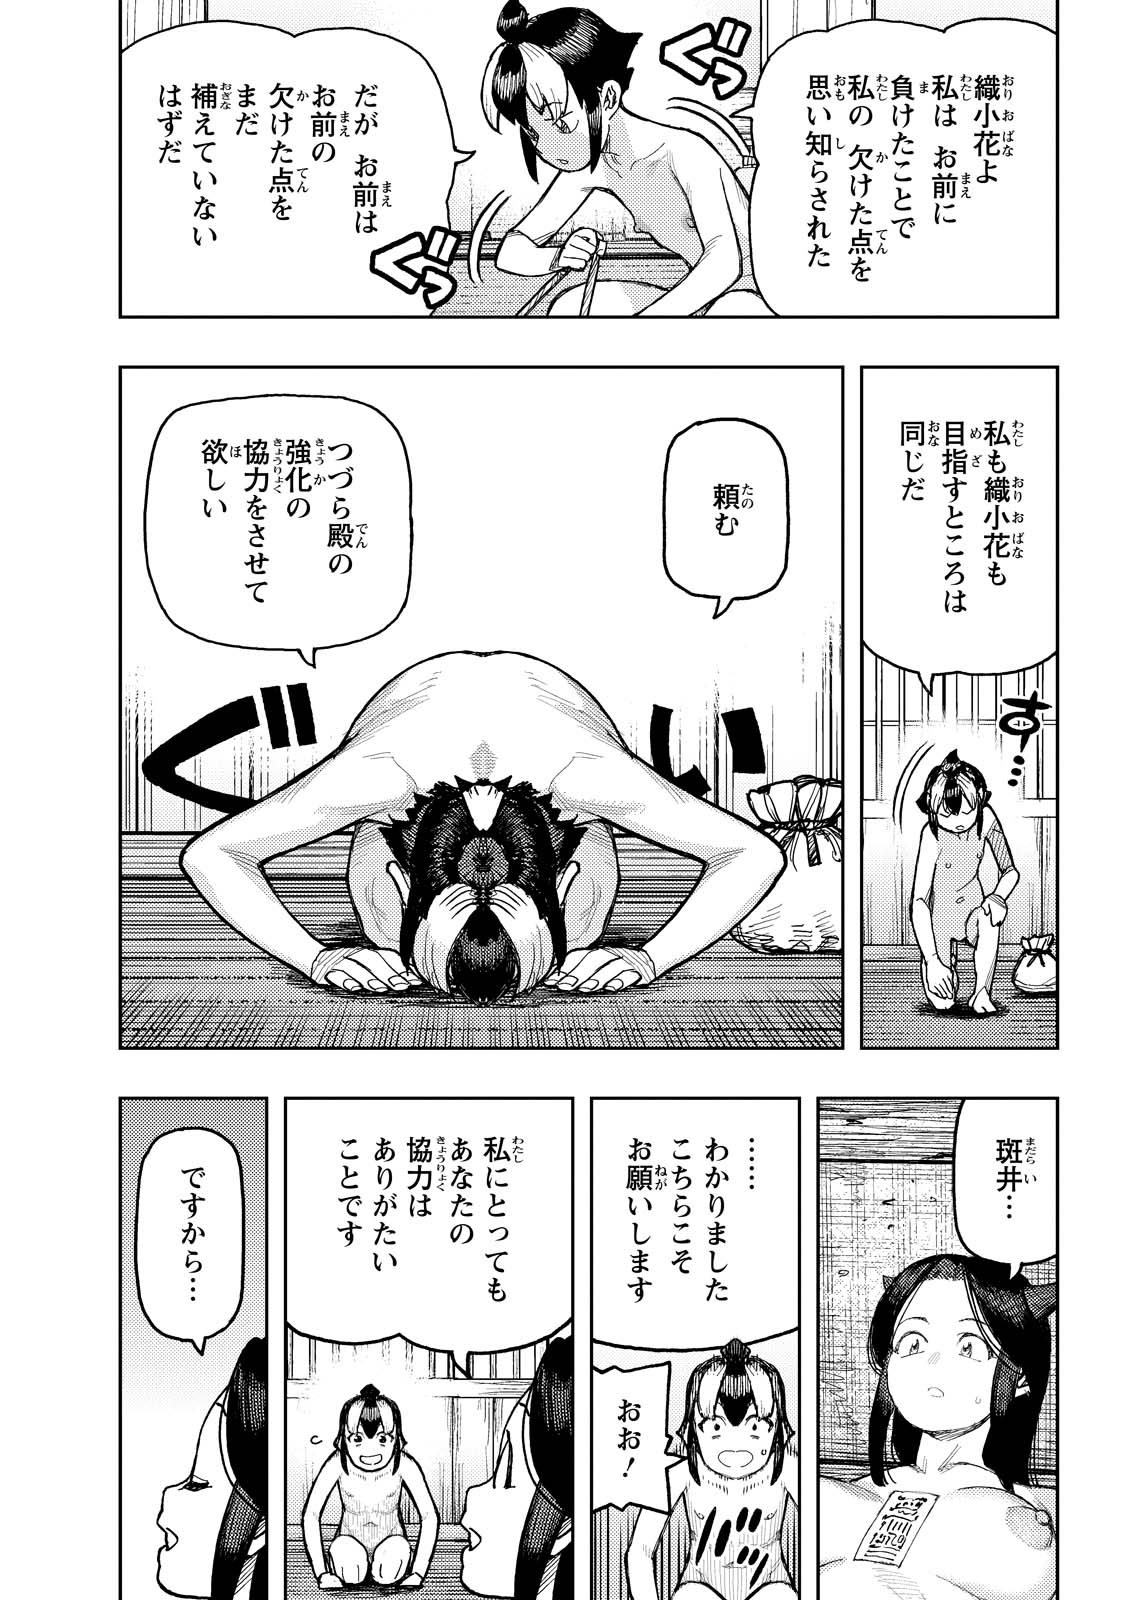 Tsugumomo - Chapter 167 - Page 15